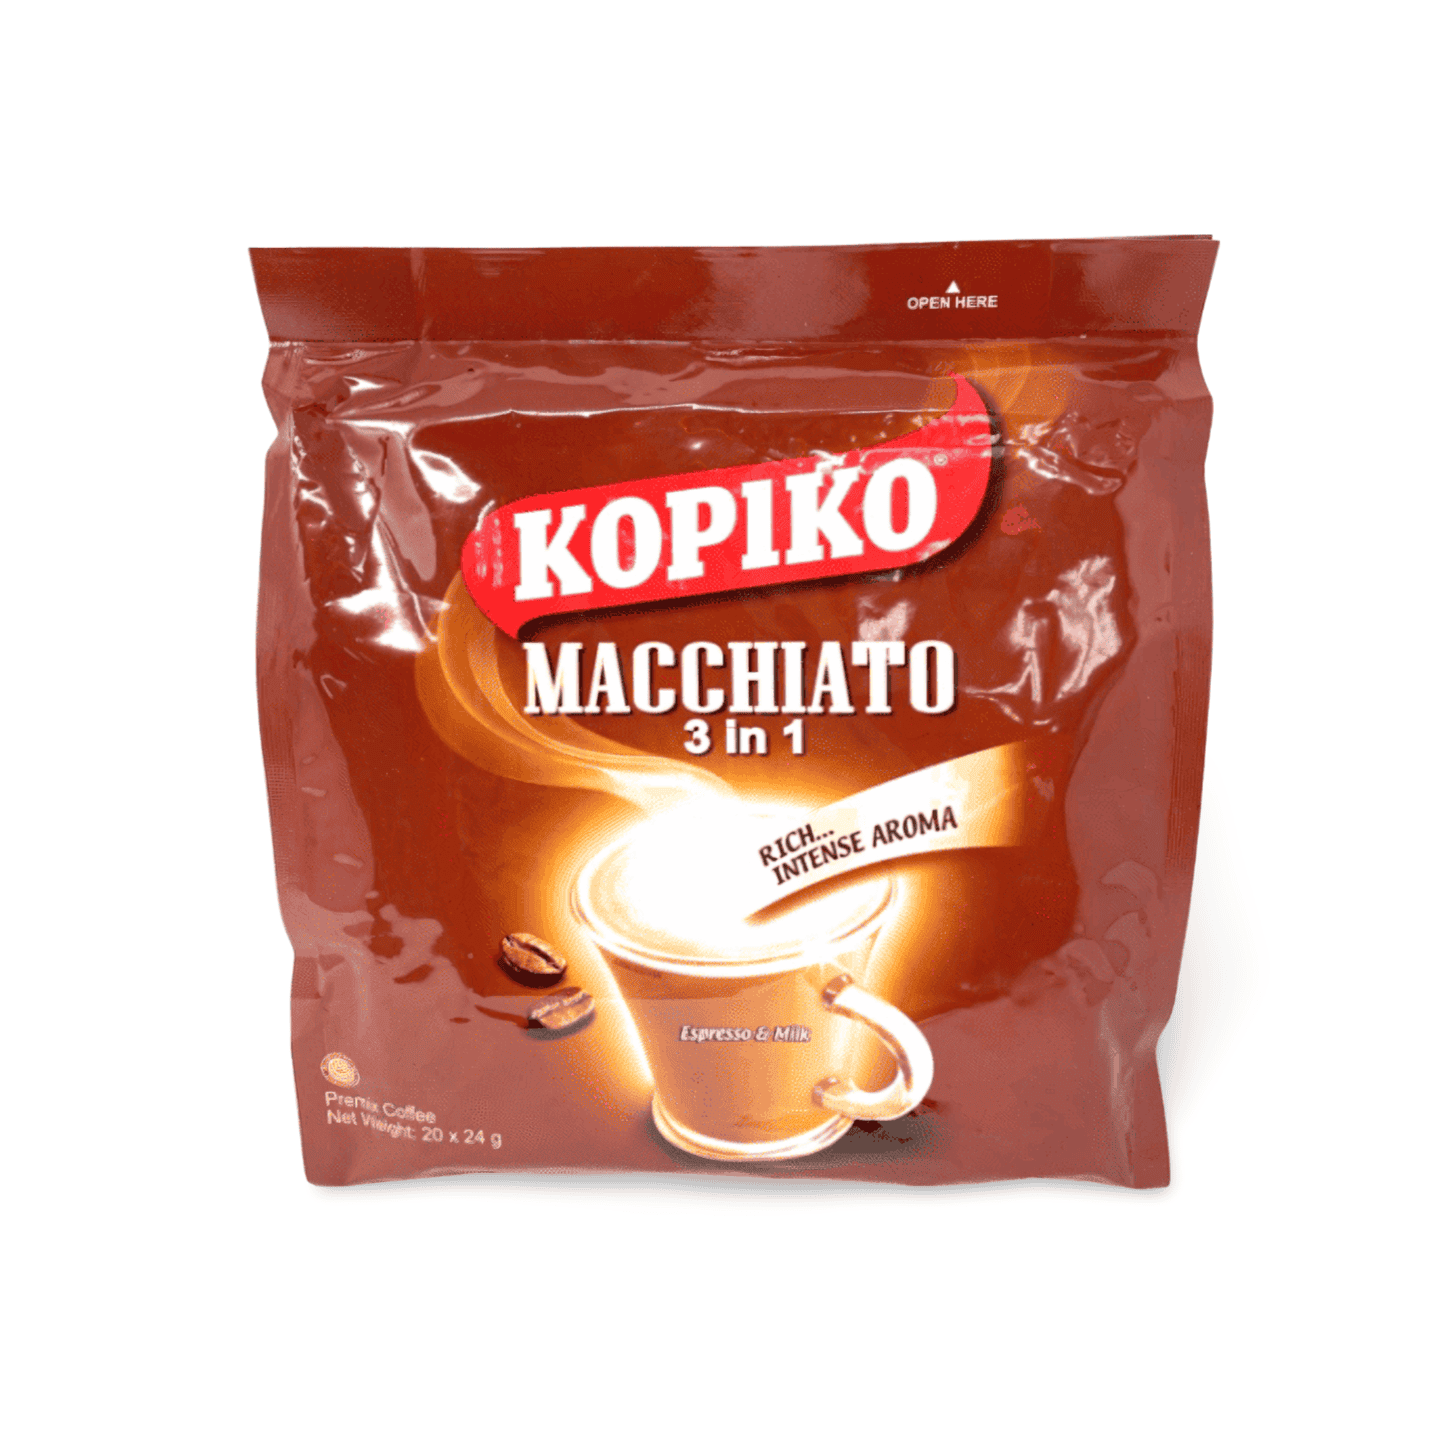 Kopiko Macchiato Coffee